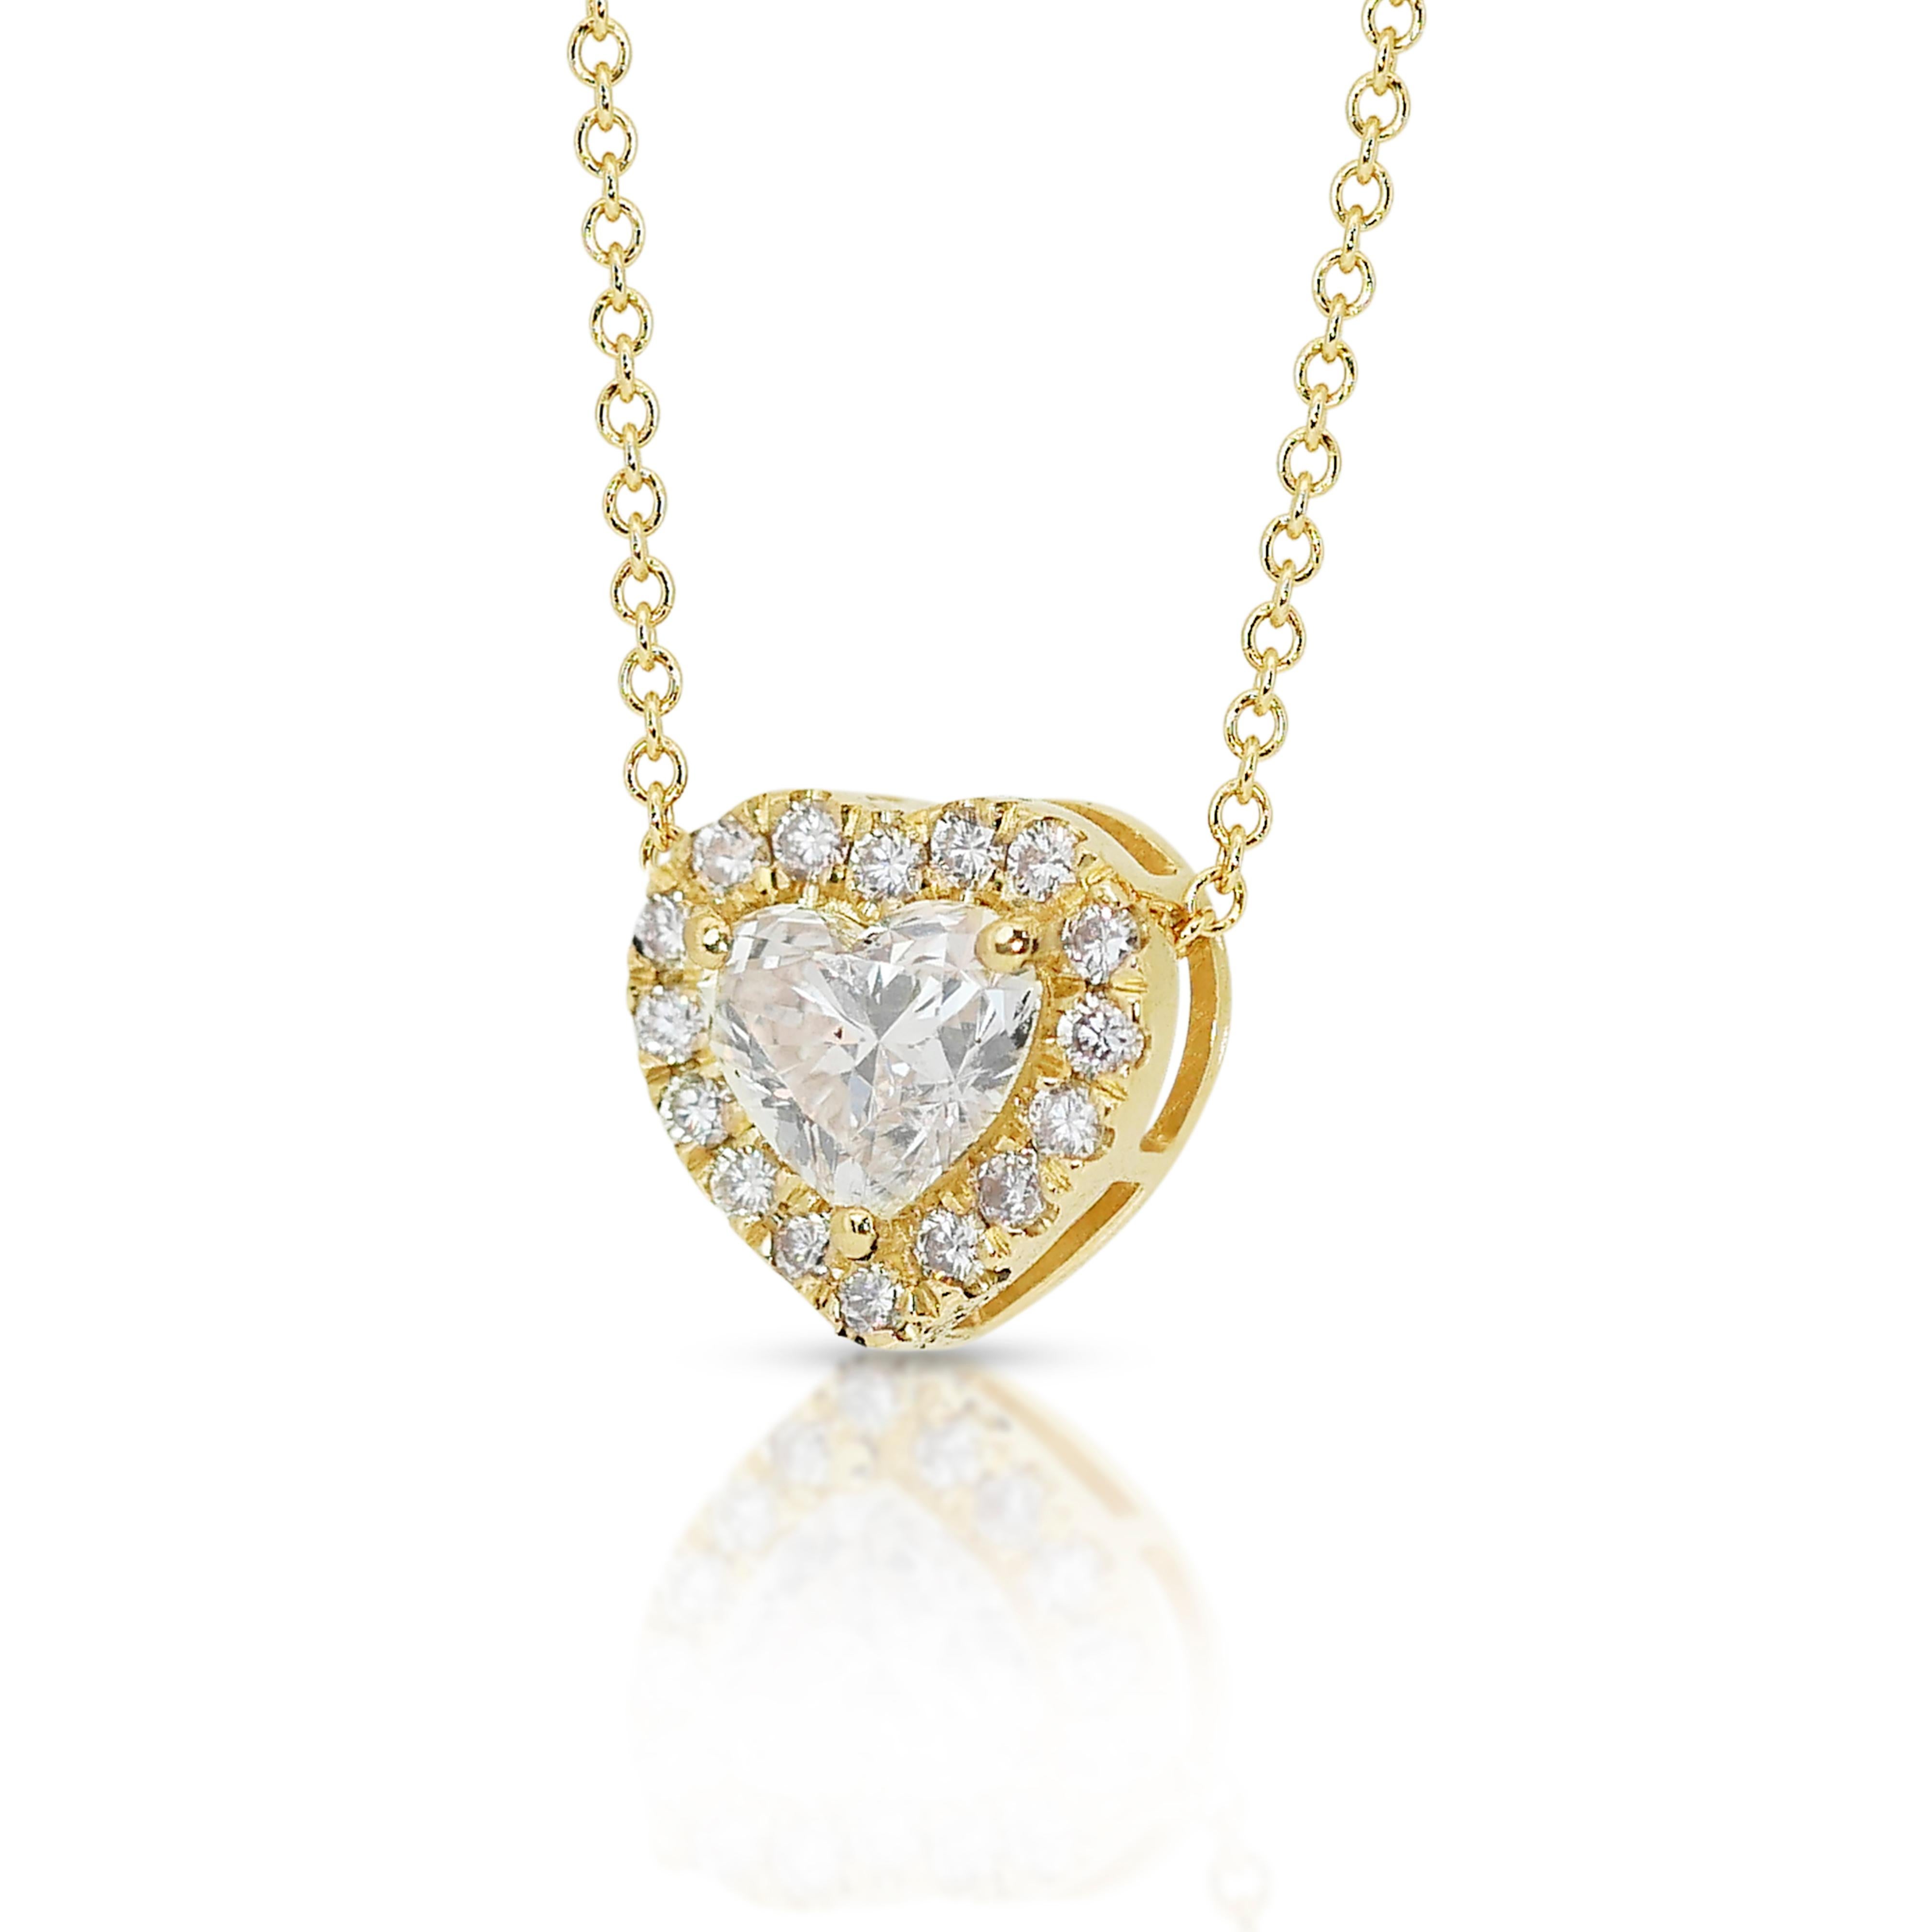 Brilliant 1.28ct Diamonds Halo Necklace in 18k Yellow Gold - IGI Certified In New Condition For Sale In רמת גן, IL